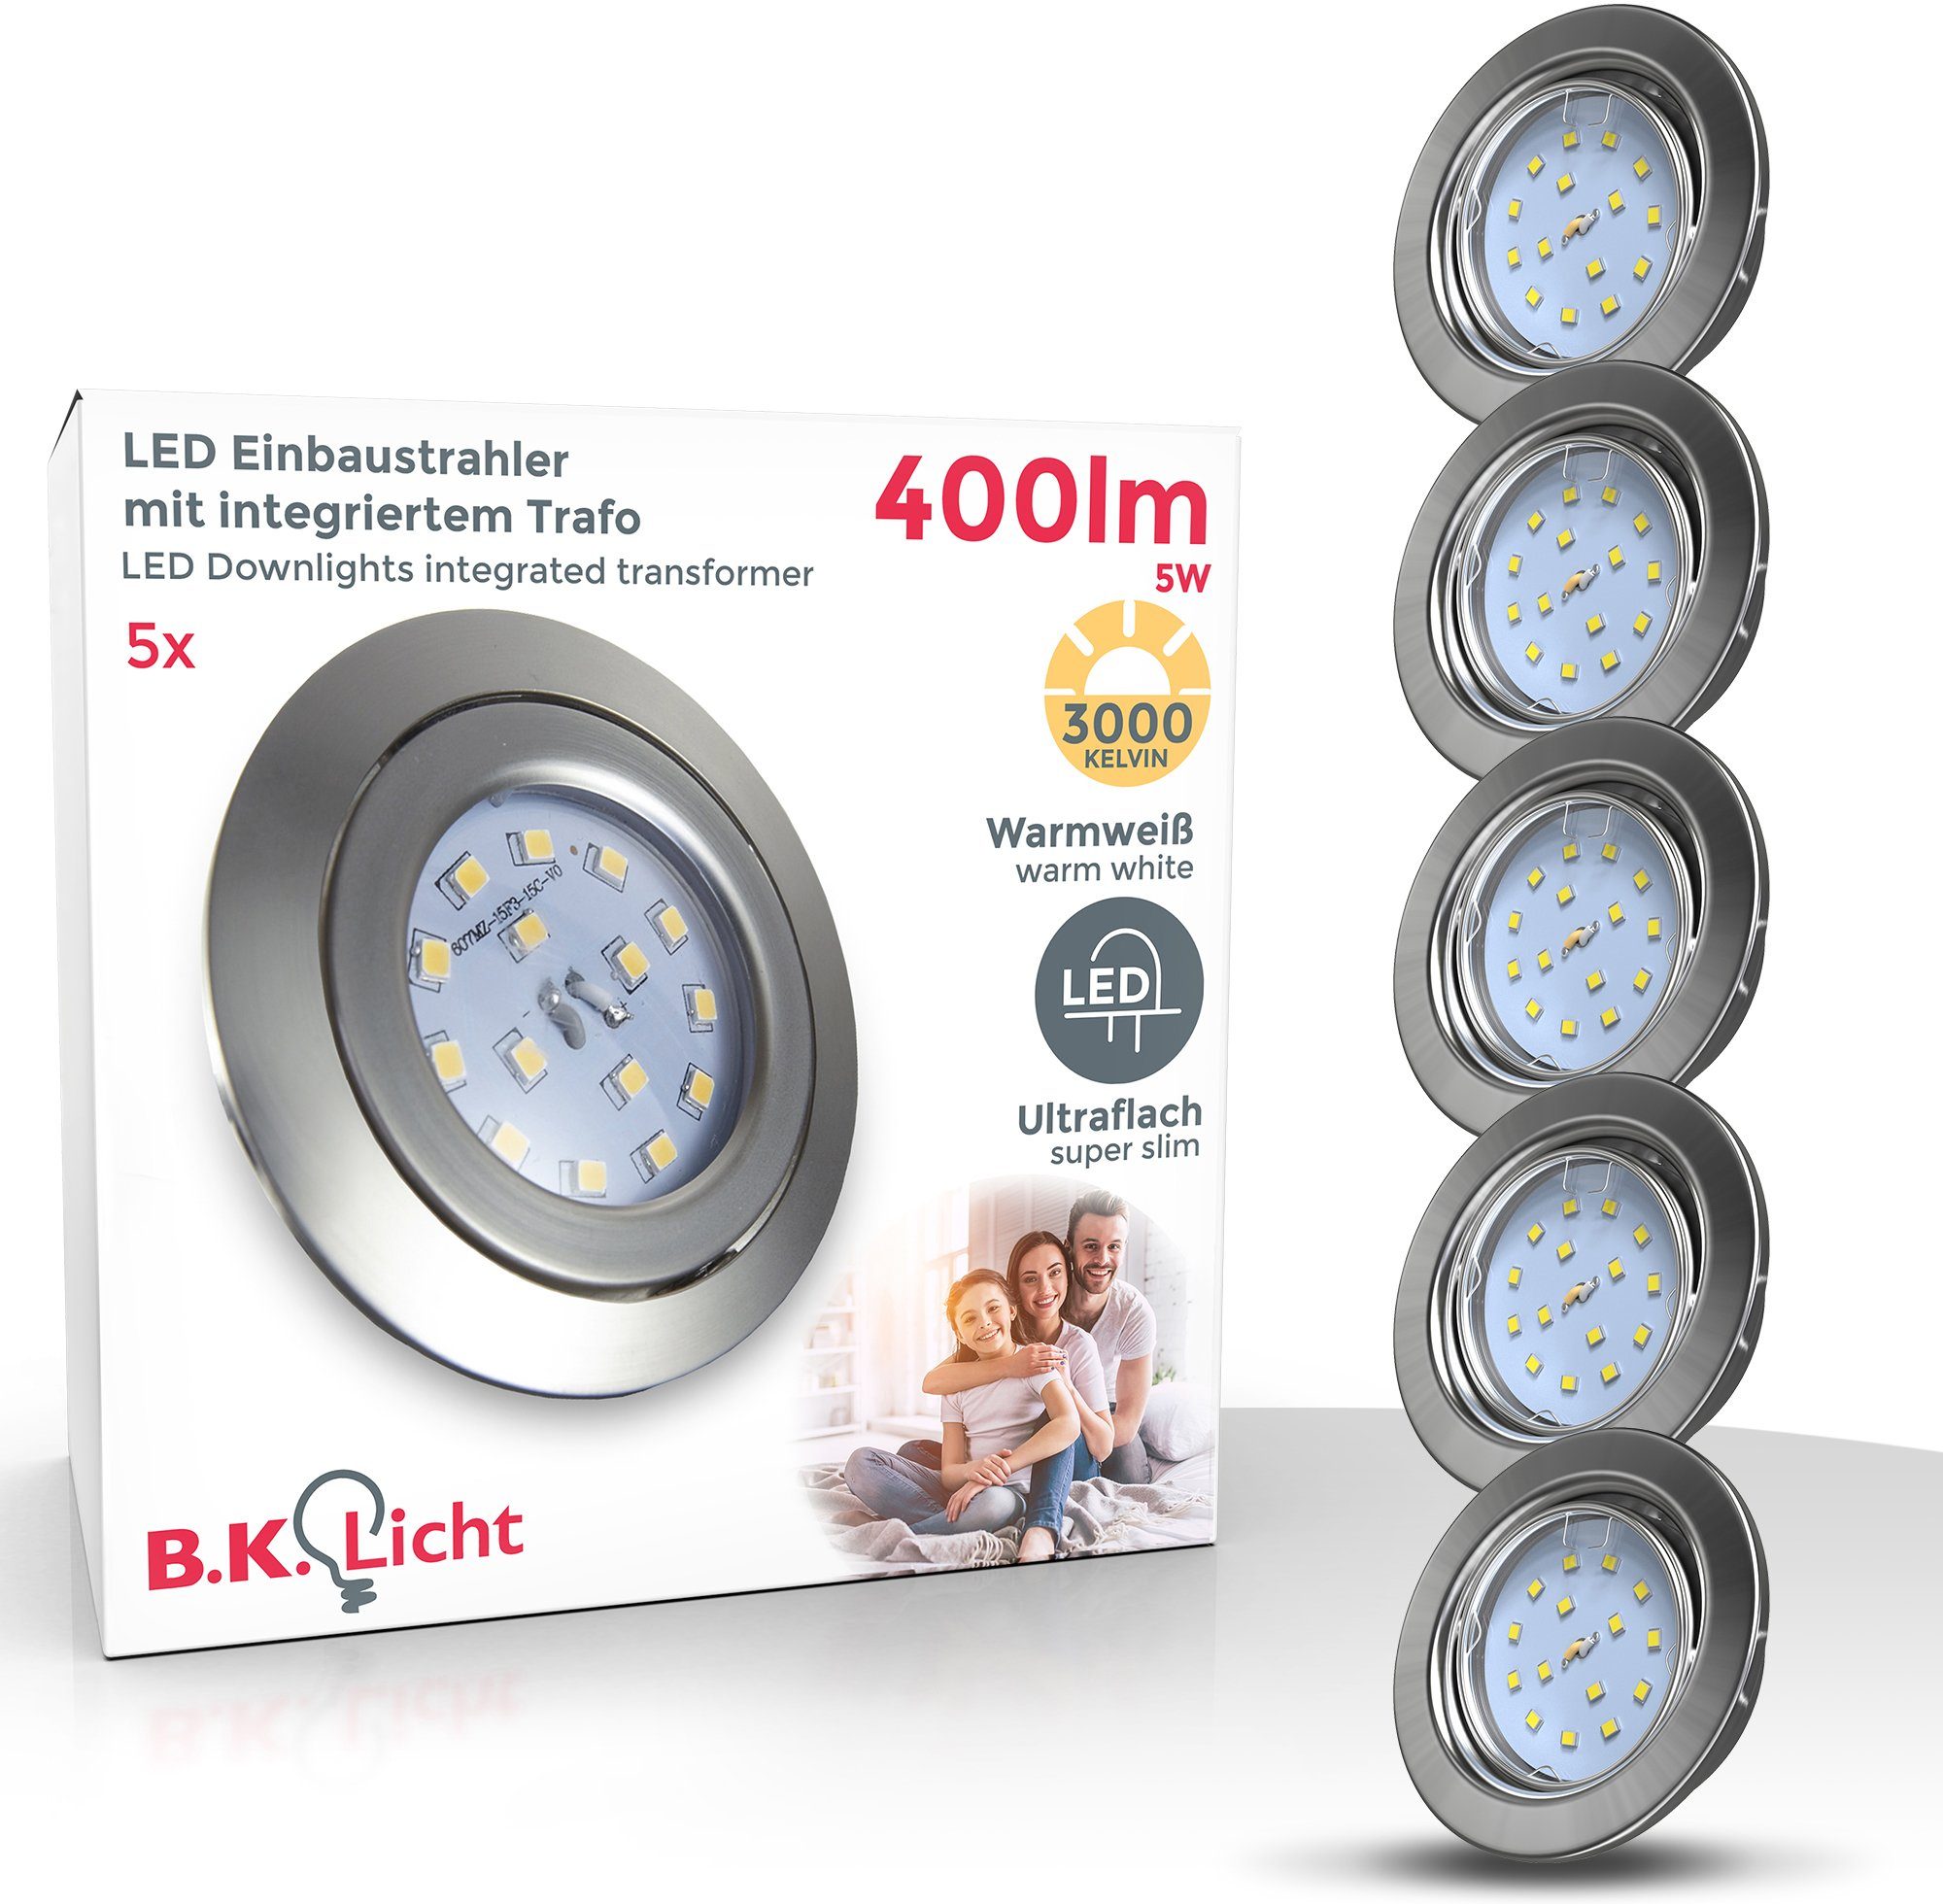 LED Einbauleuchte, 5W schwenkbar LED flach, inkl. 400LM LED 5x Einbauspots, Warmweiß, integriert, fest 3000K, ultra B.K.Licht